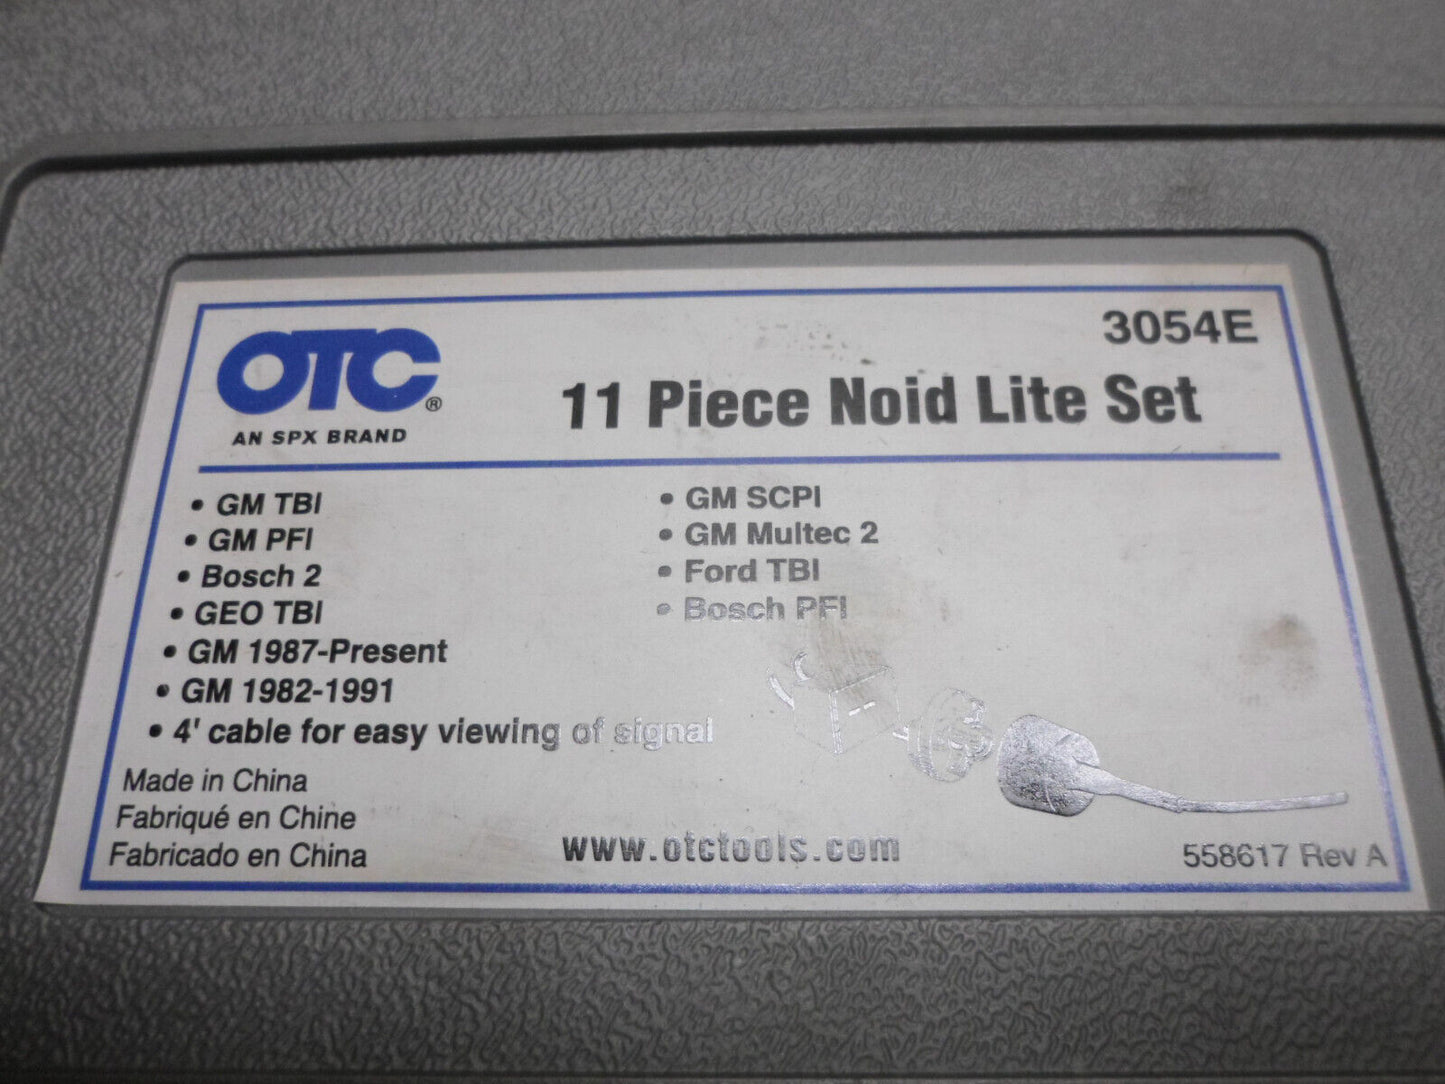 11 Piece Noid Lite Set OTC3054E